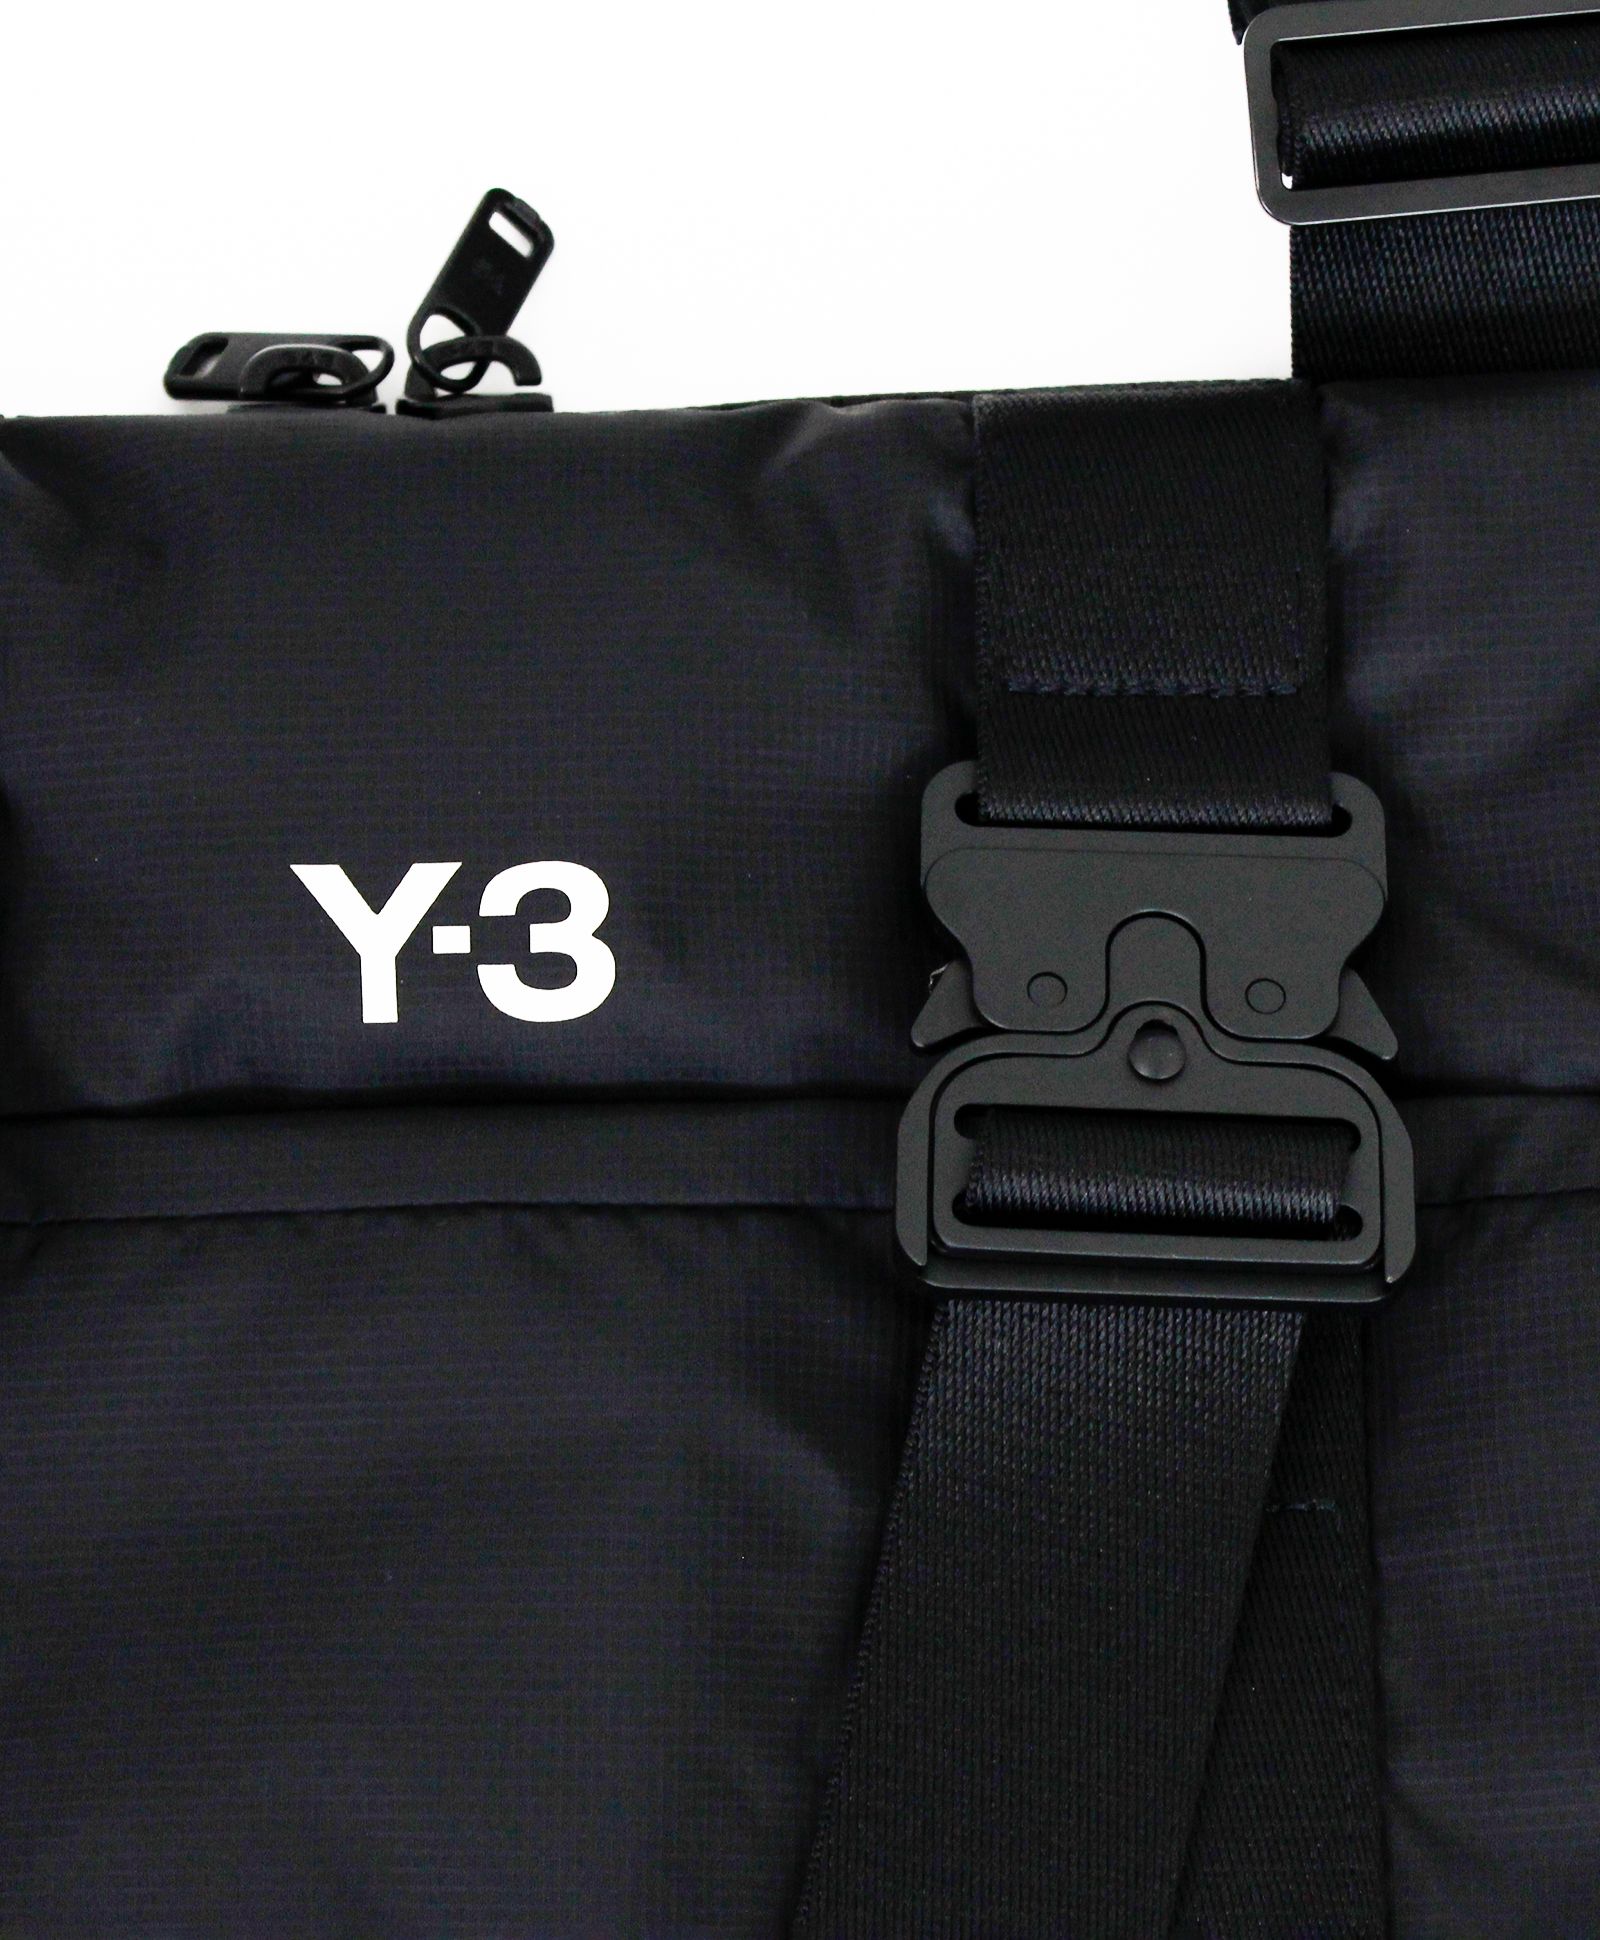 Y-3 - コンバーチブル クロスボディバッグ / Y-3 CN X BODY BAG 